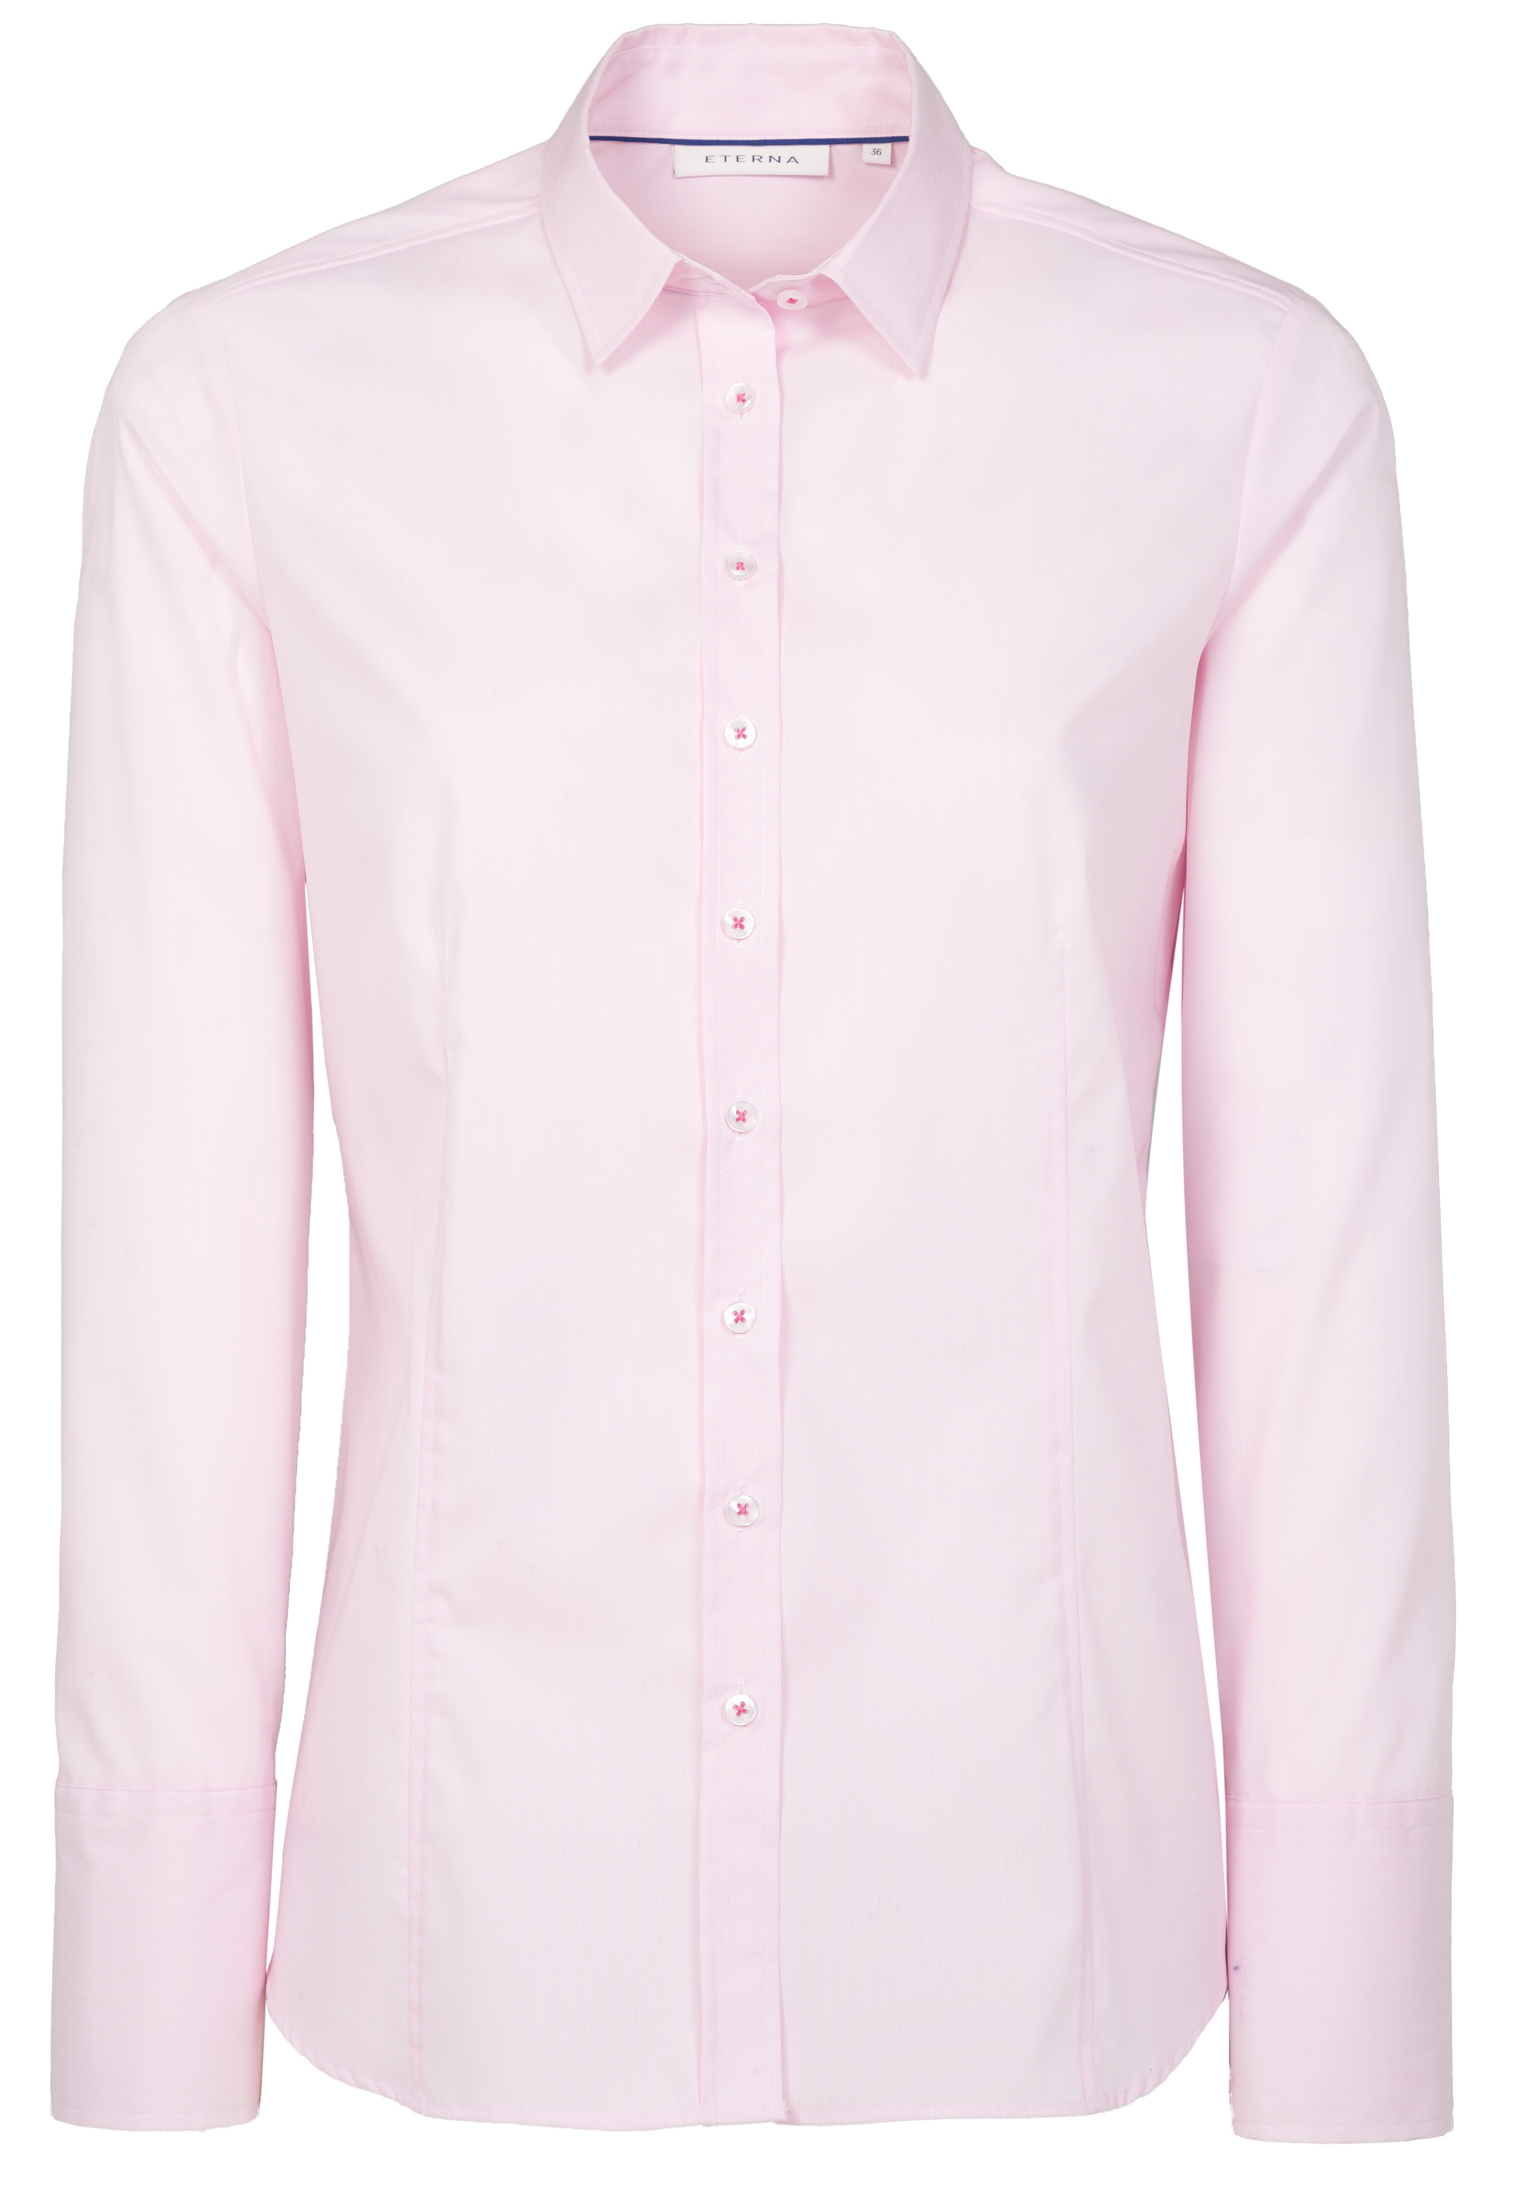 ETERNA MODERN CLASSIC Langarm Bekleidung D624.51 Damen Blusen | 6151 Fit Modern rosa-weiß | | | Jeans-Manufaktur | Eterna gestreift Bluse